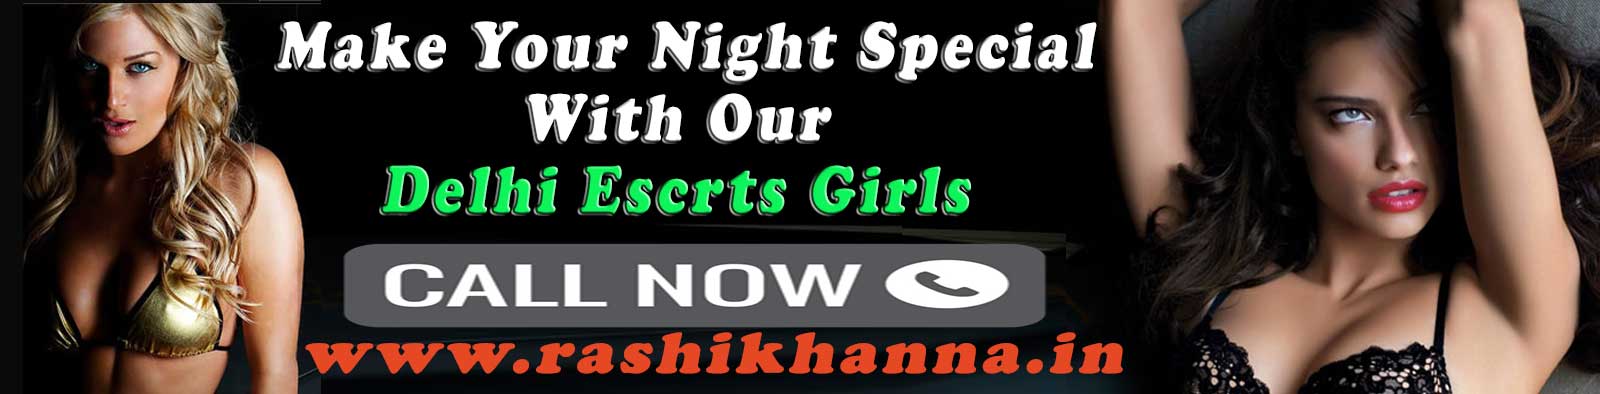 Call Girls Services delhi